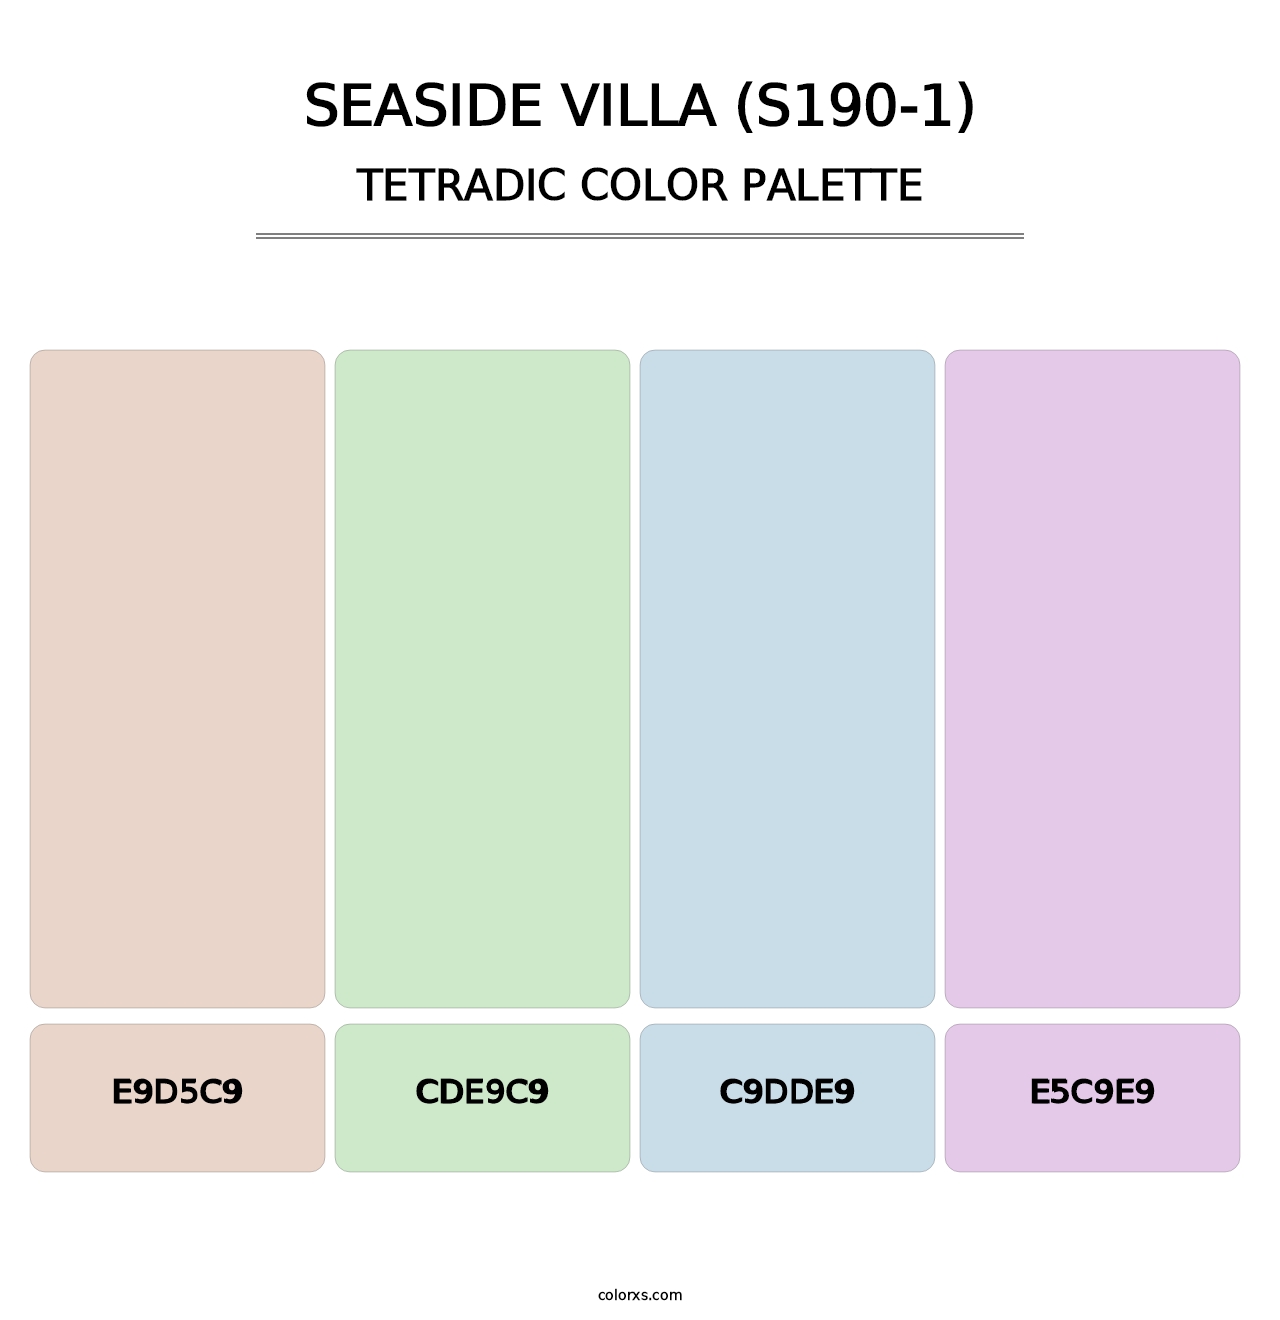 Seaside Villa (S190-1) - Tetradic Color Palette